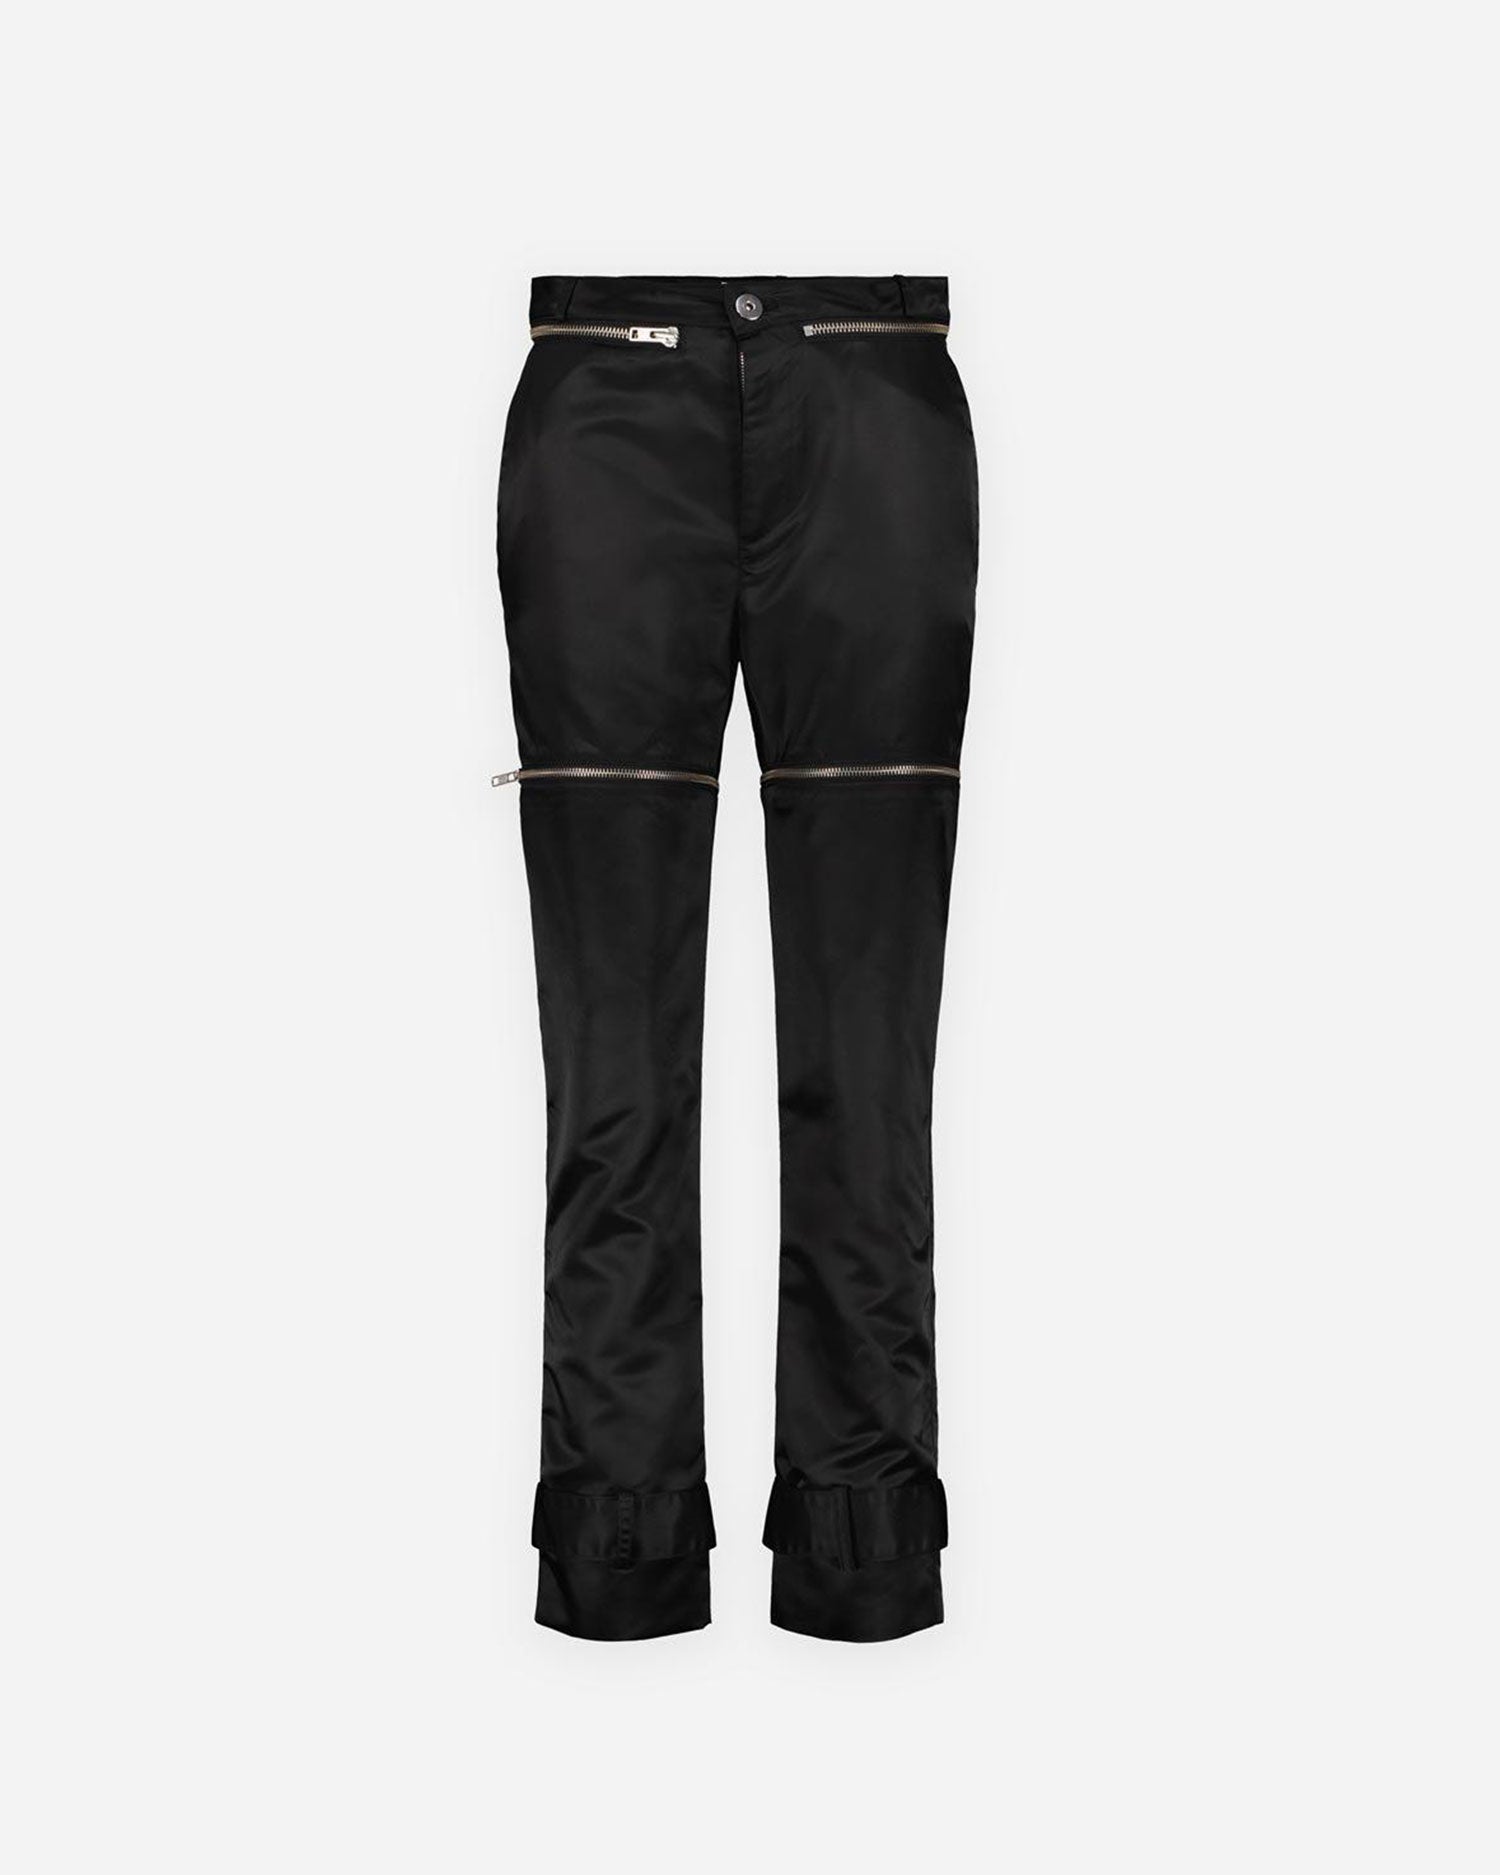 Unisex Zipper Pants - Pants - Vaquera - Elevastor